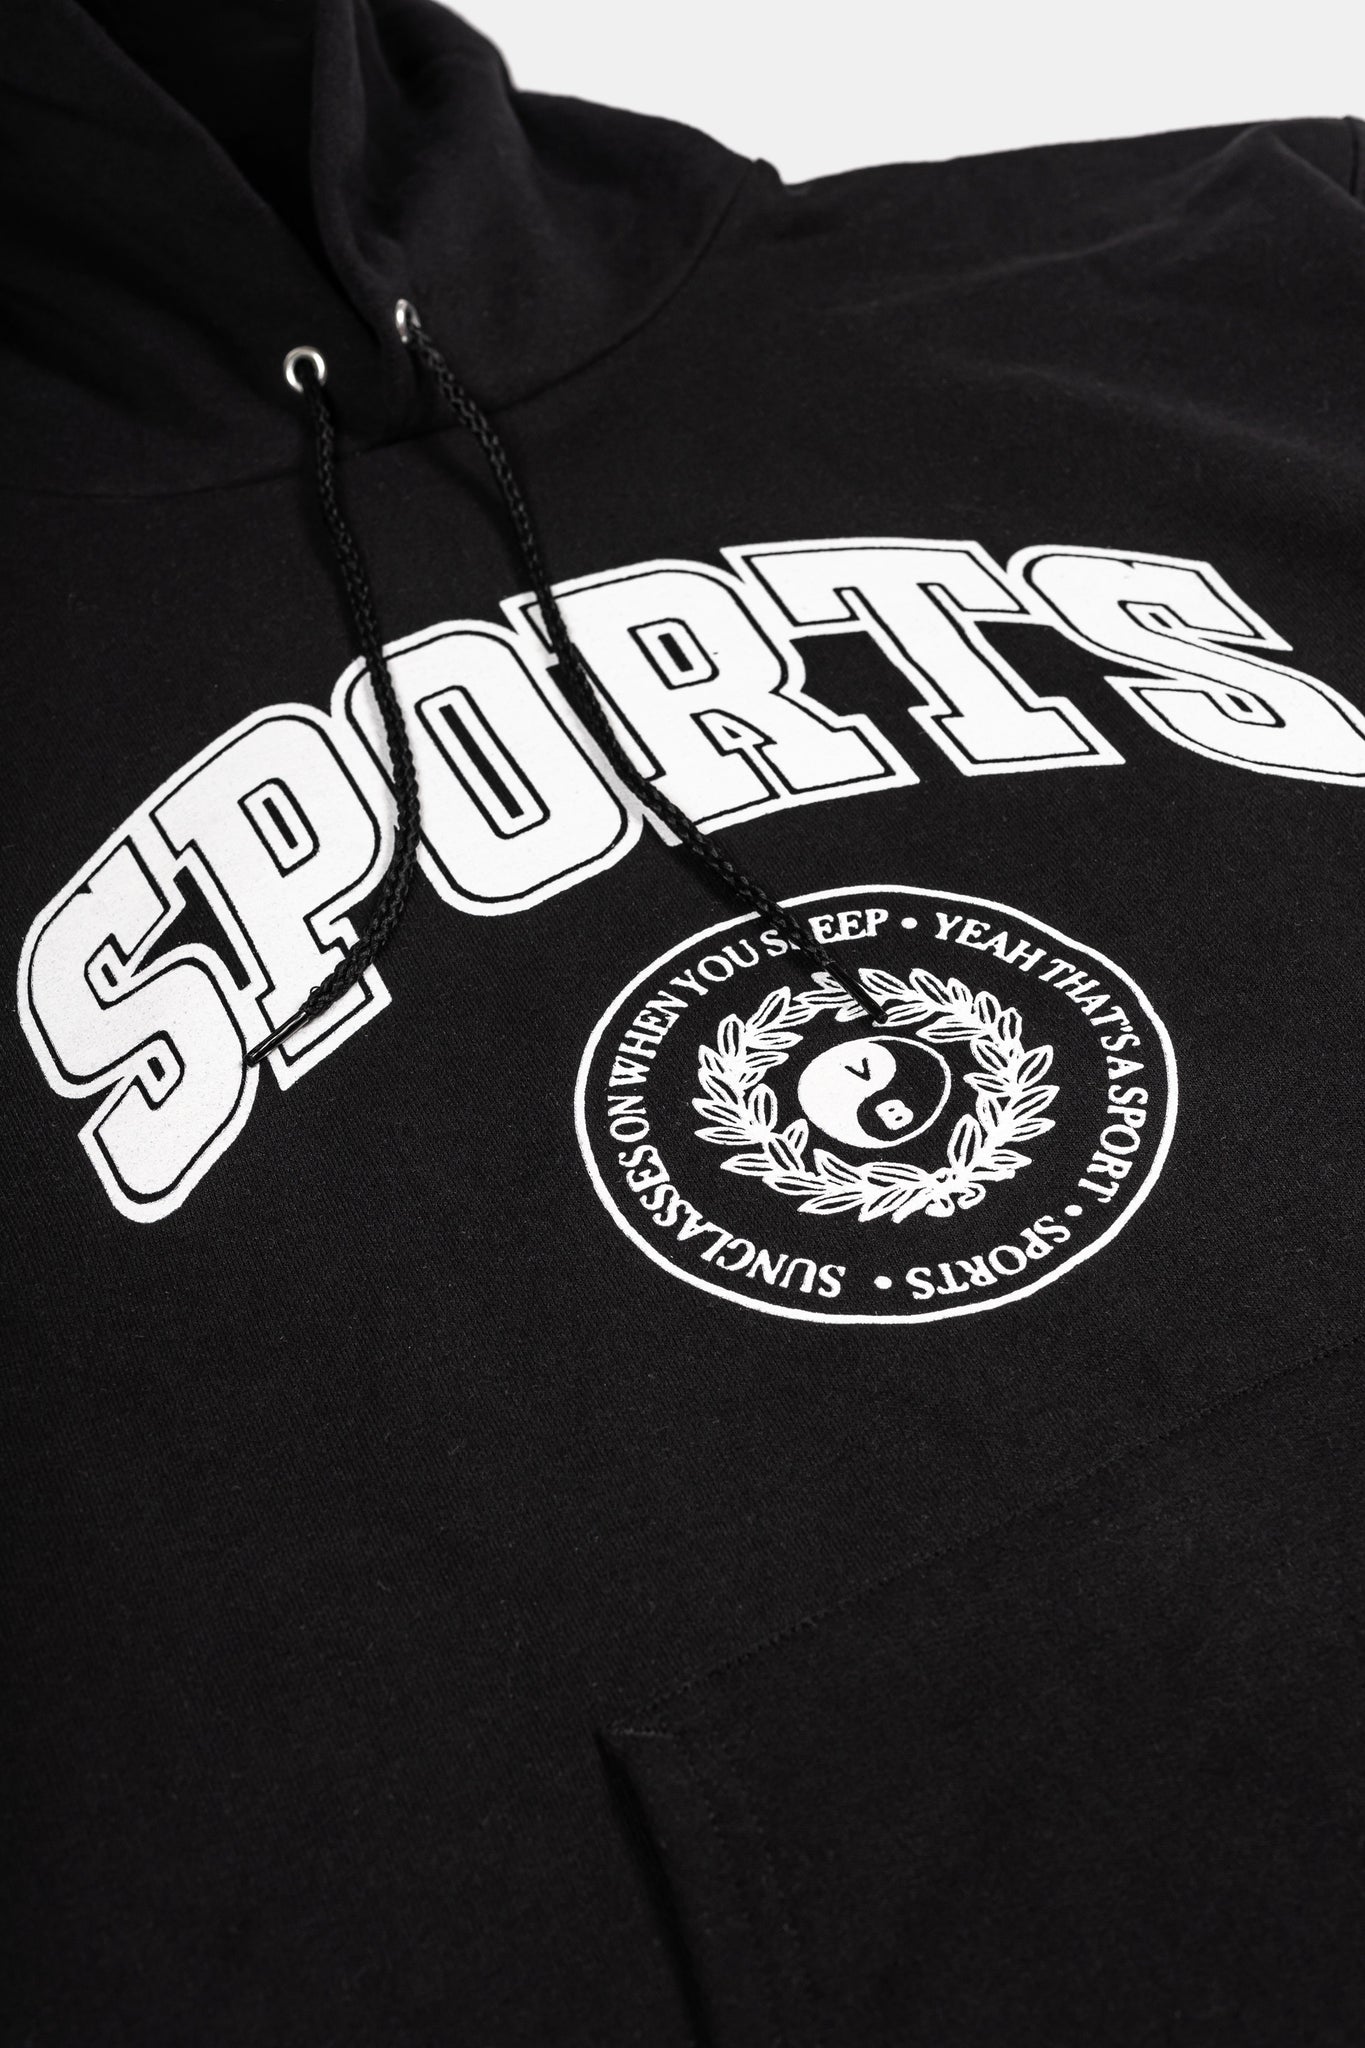 Sports Logo Hoodie (Black)